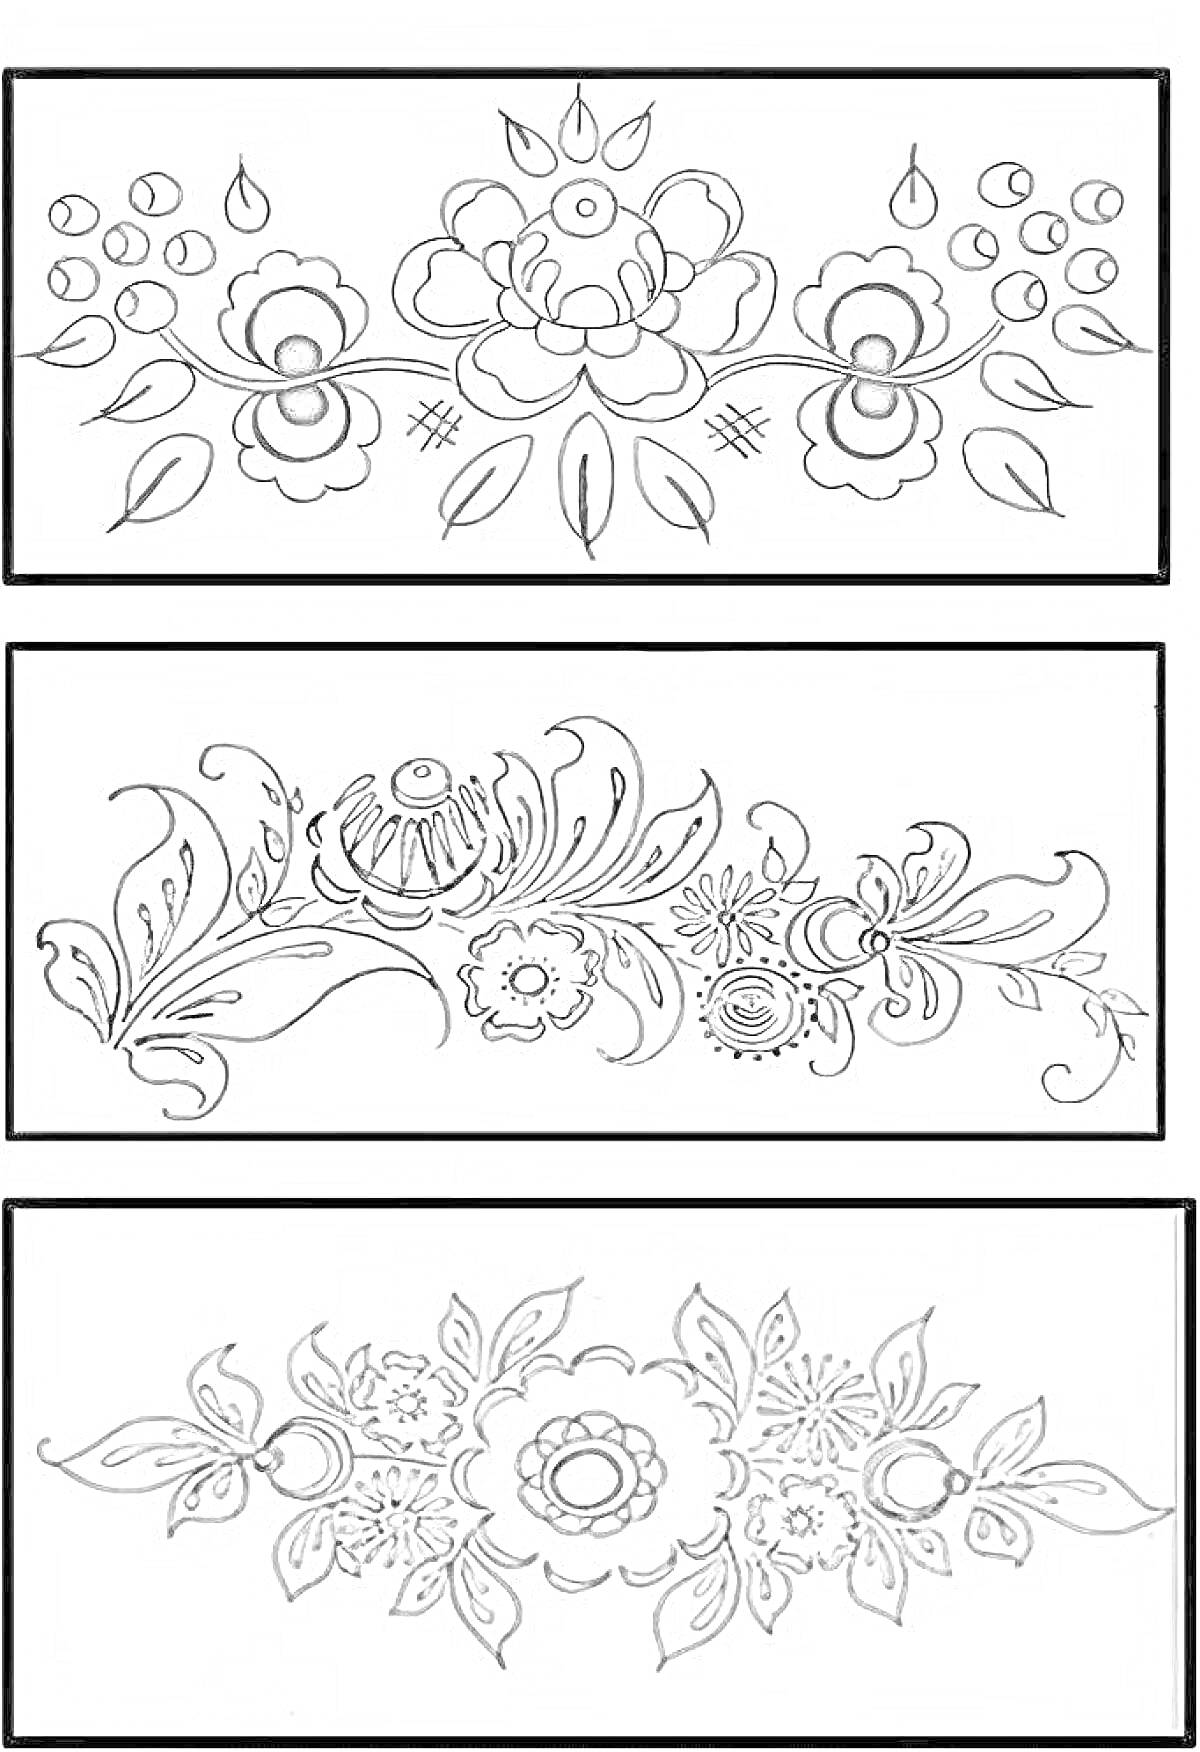 Раскраска Узор в полосе с цветами и листьями, три варианта